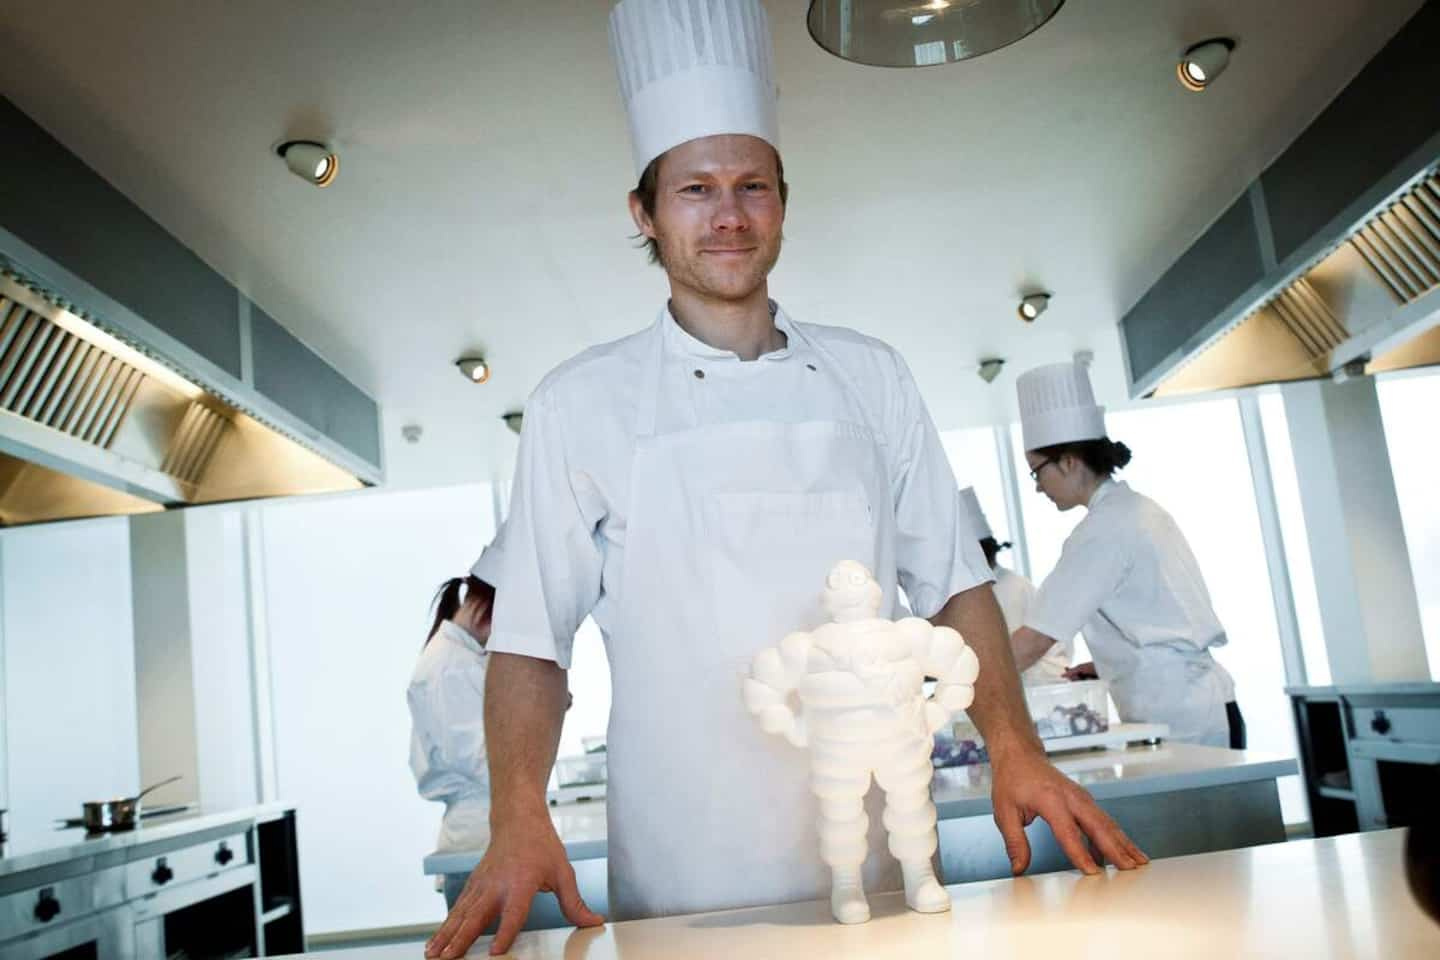 The Danish restaurant "Geranium" crowned best establishment in the world